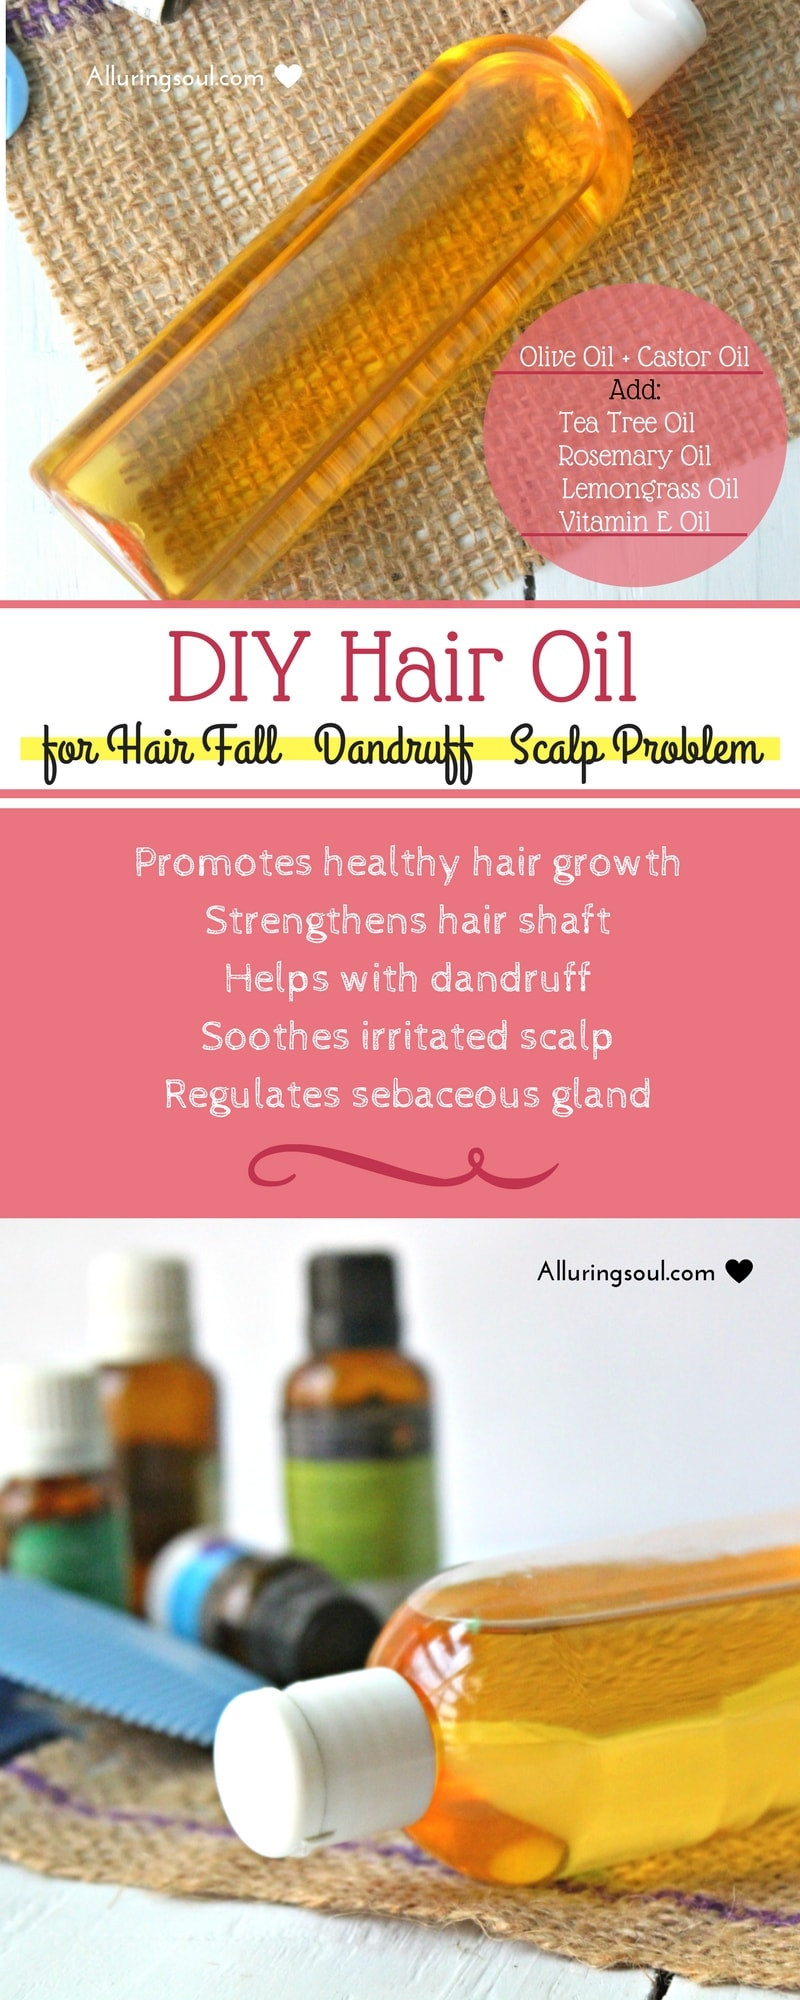 DIY Hair Grease
 DIY Hair Oil for Hair Fall Dandruff and Scalp Problem